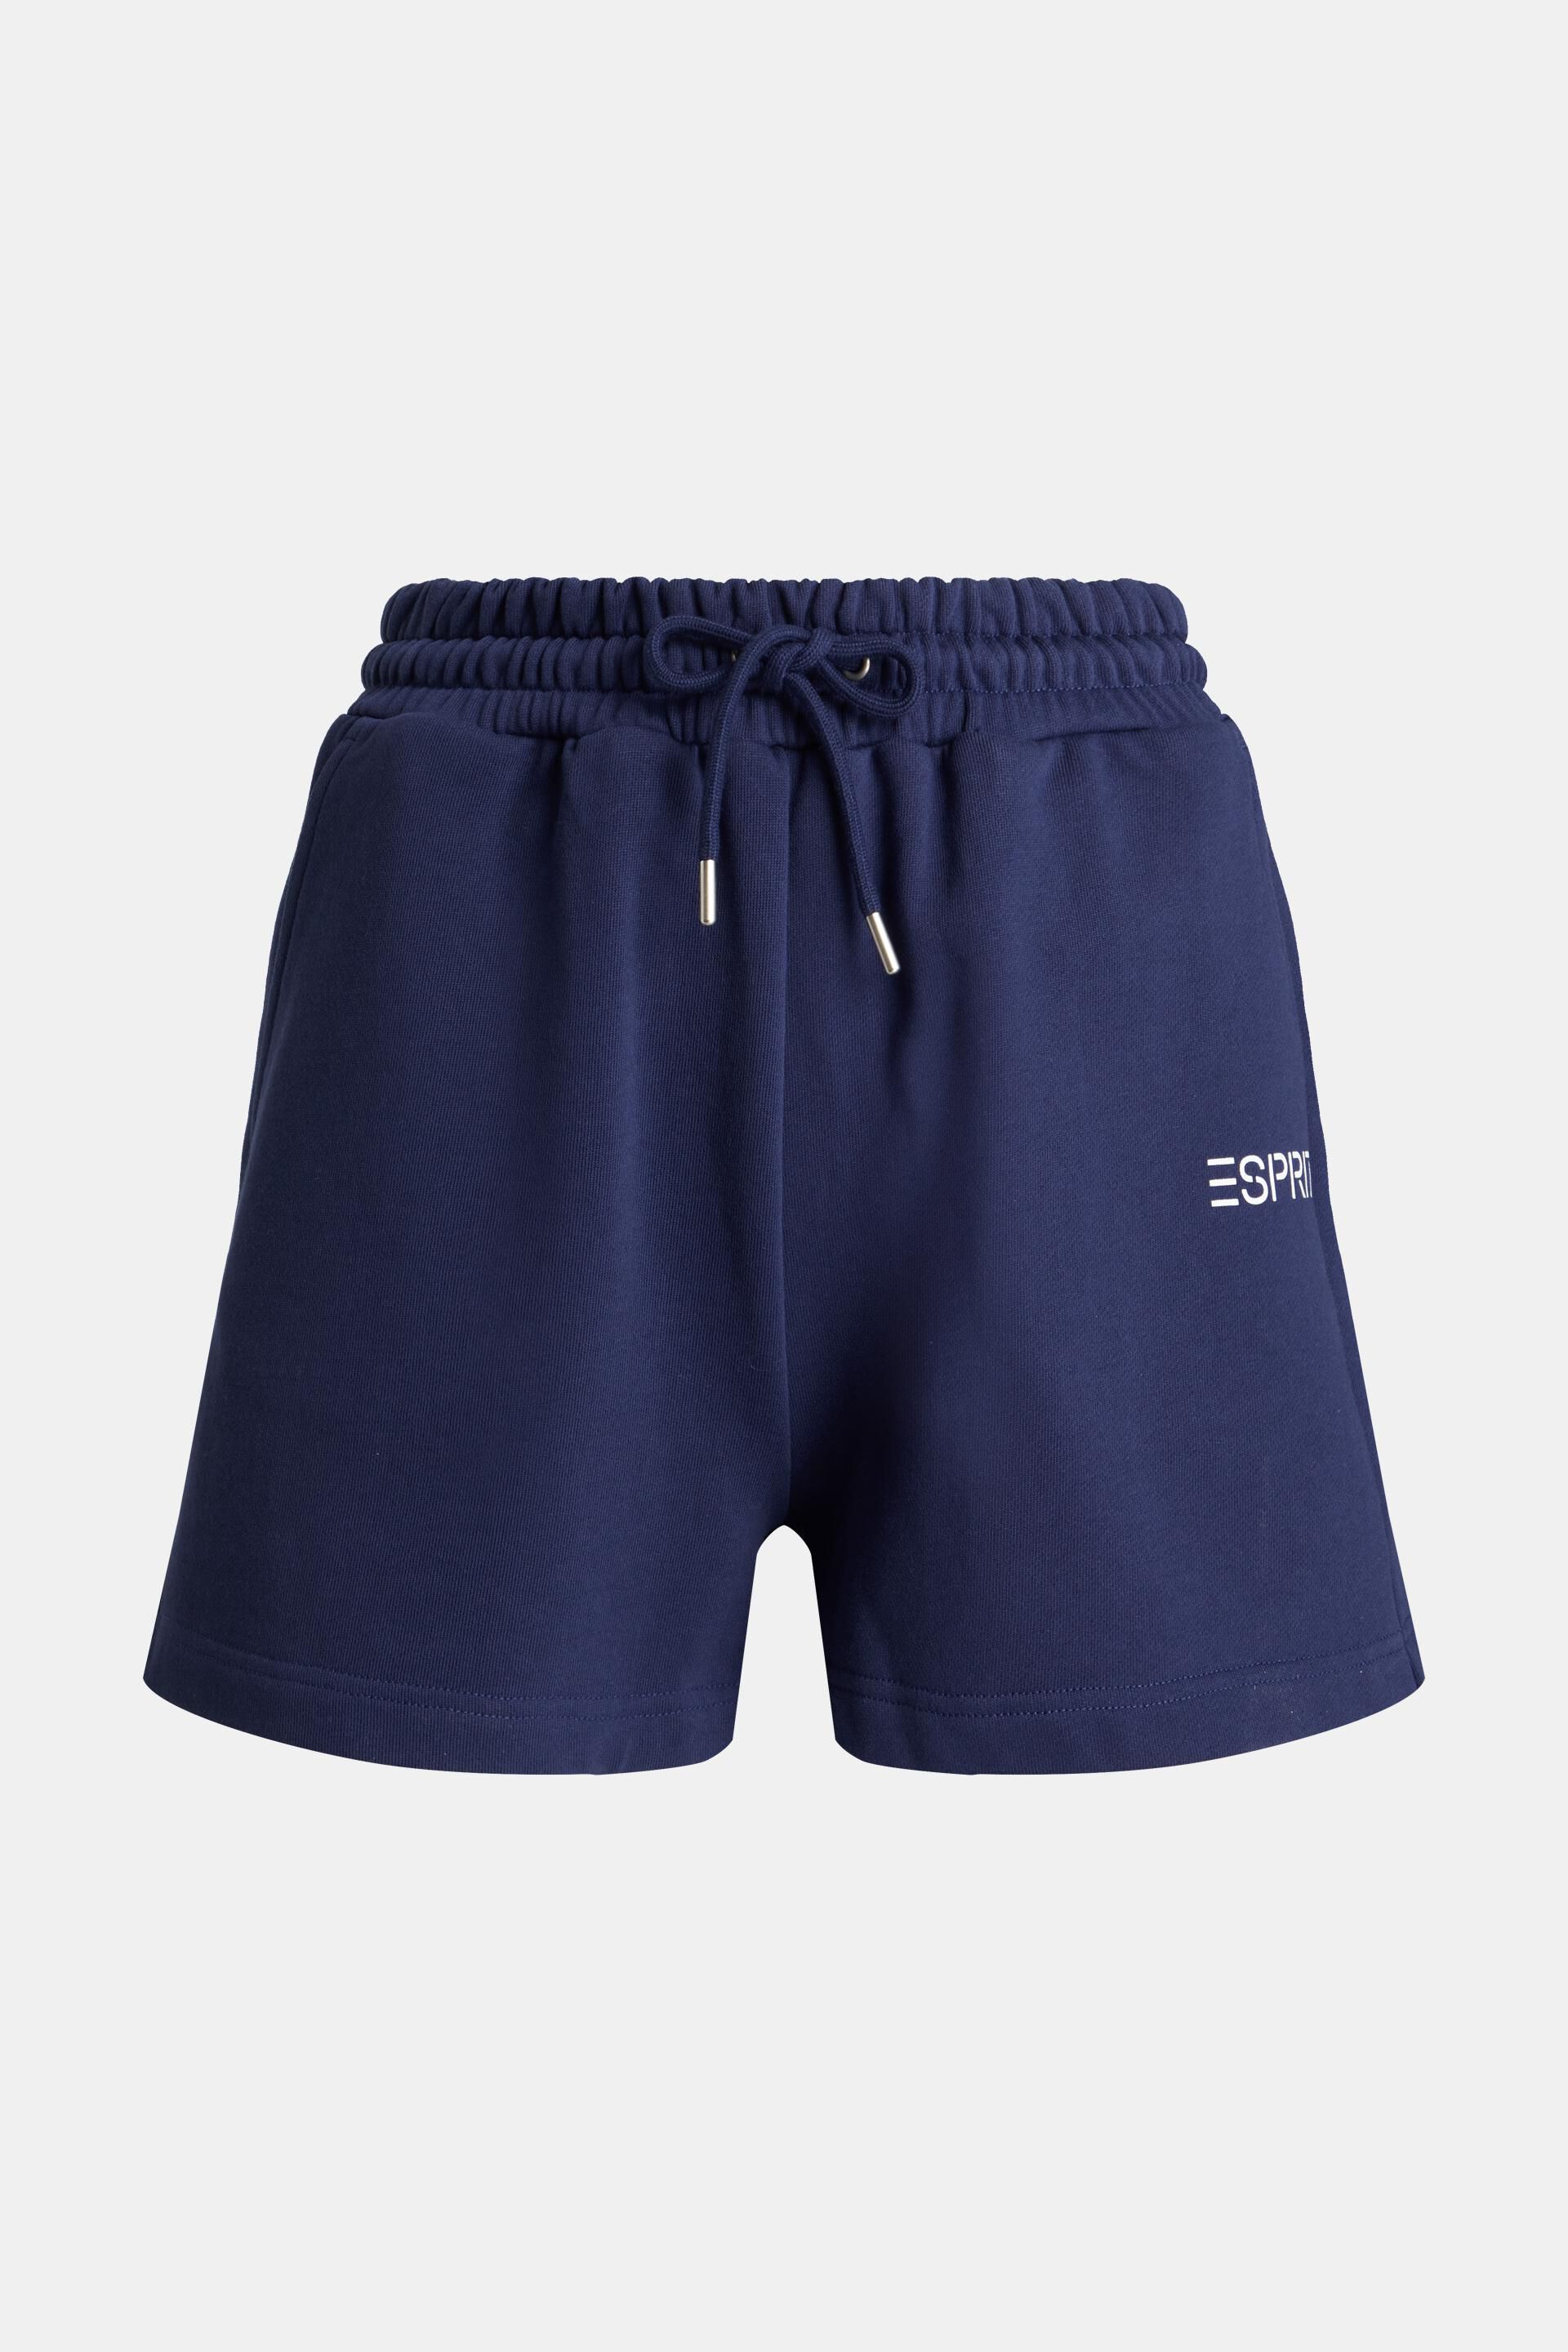 Esprit Jersey-Shorts